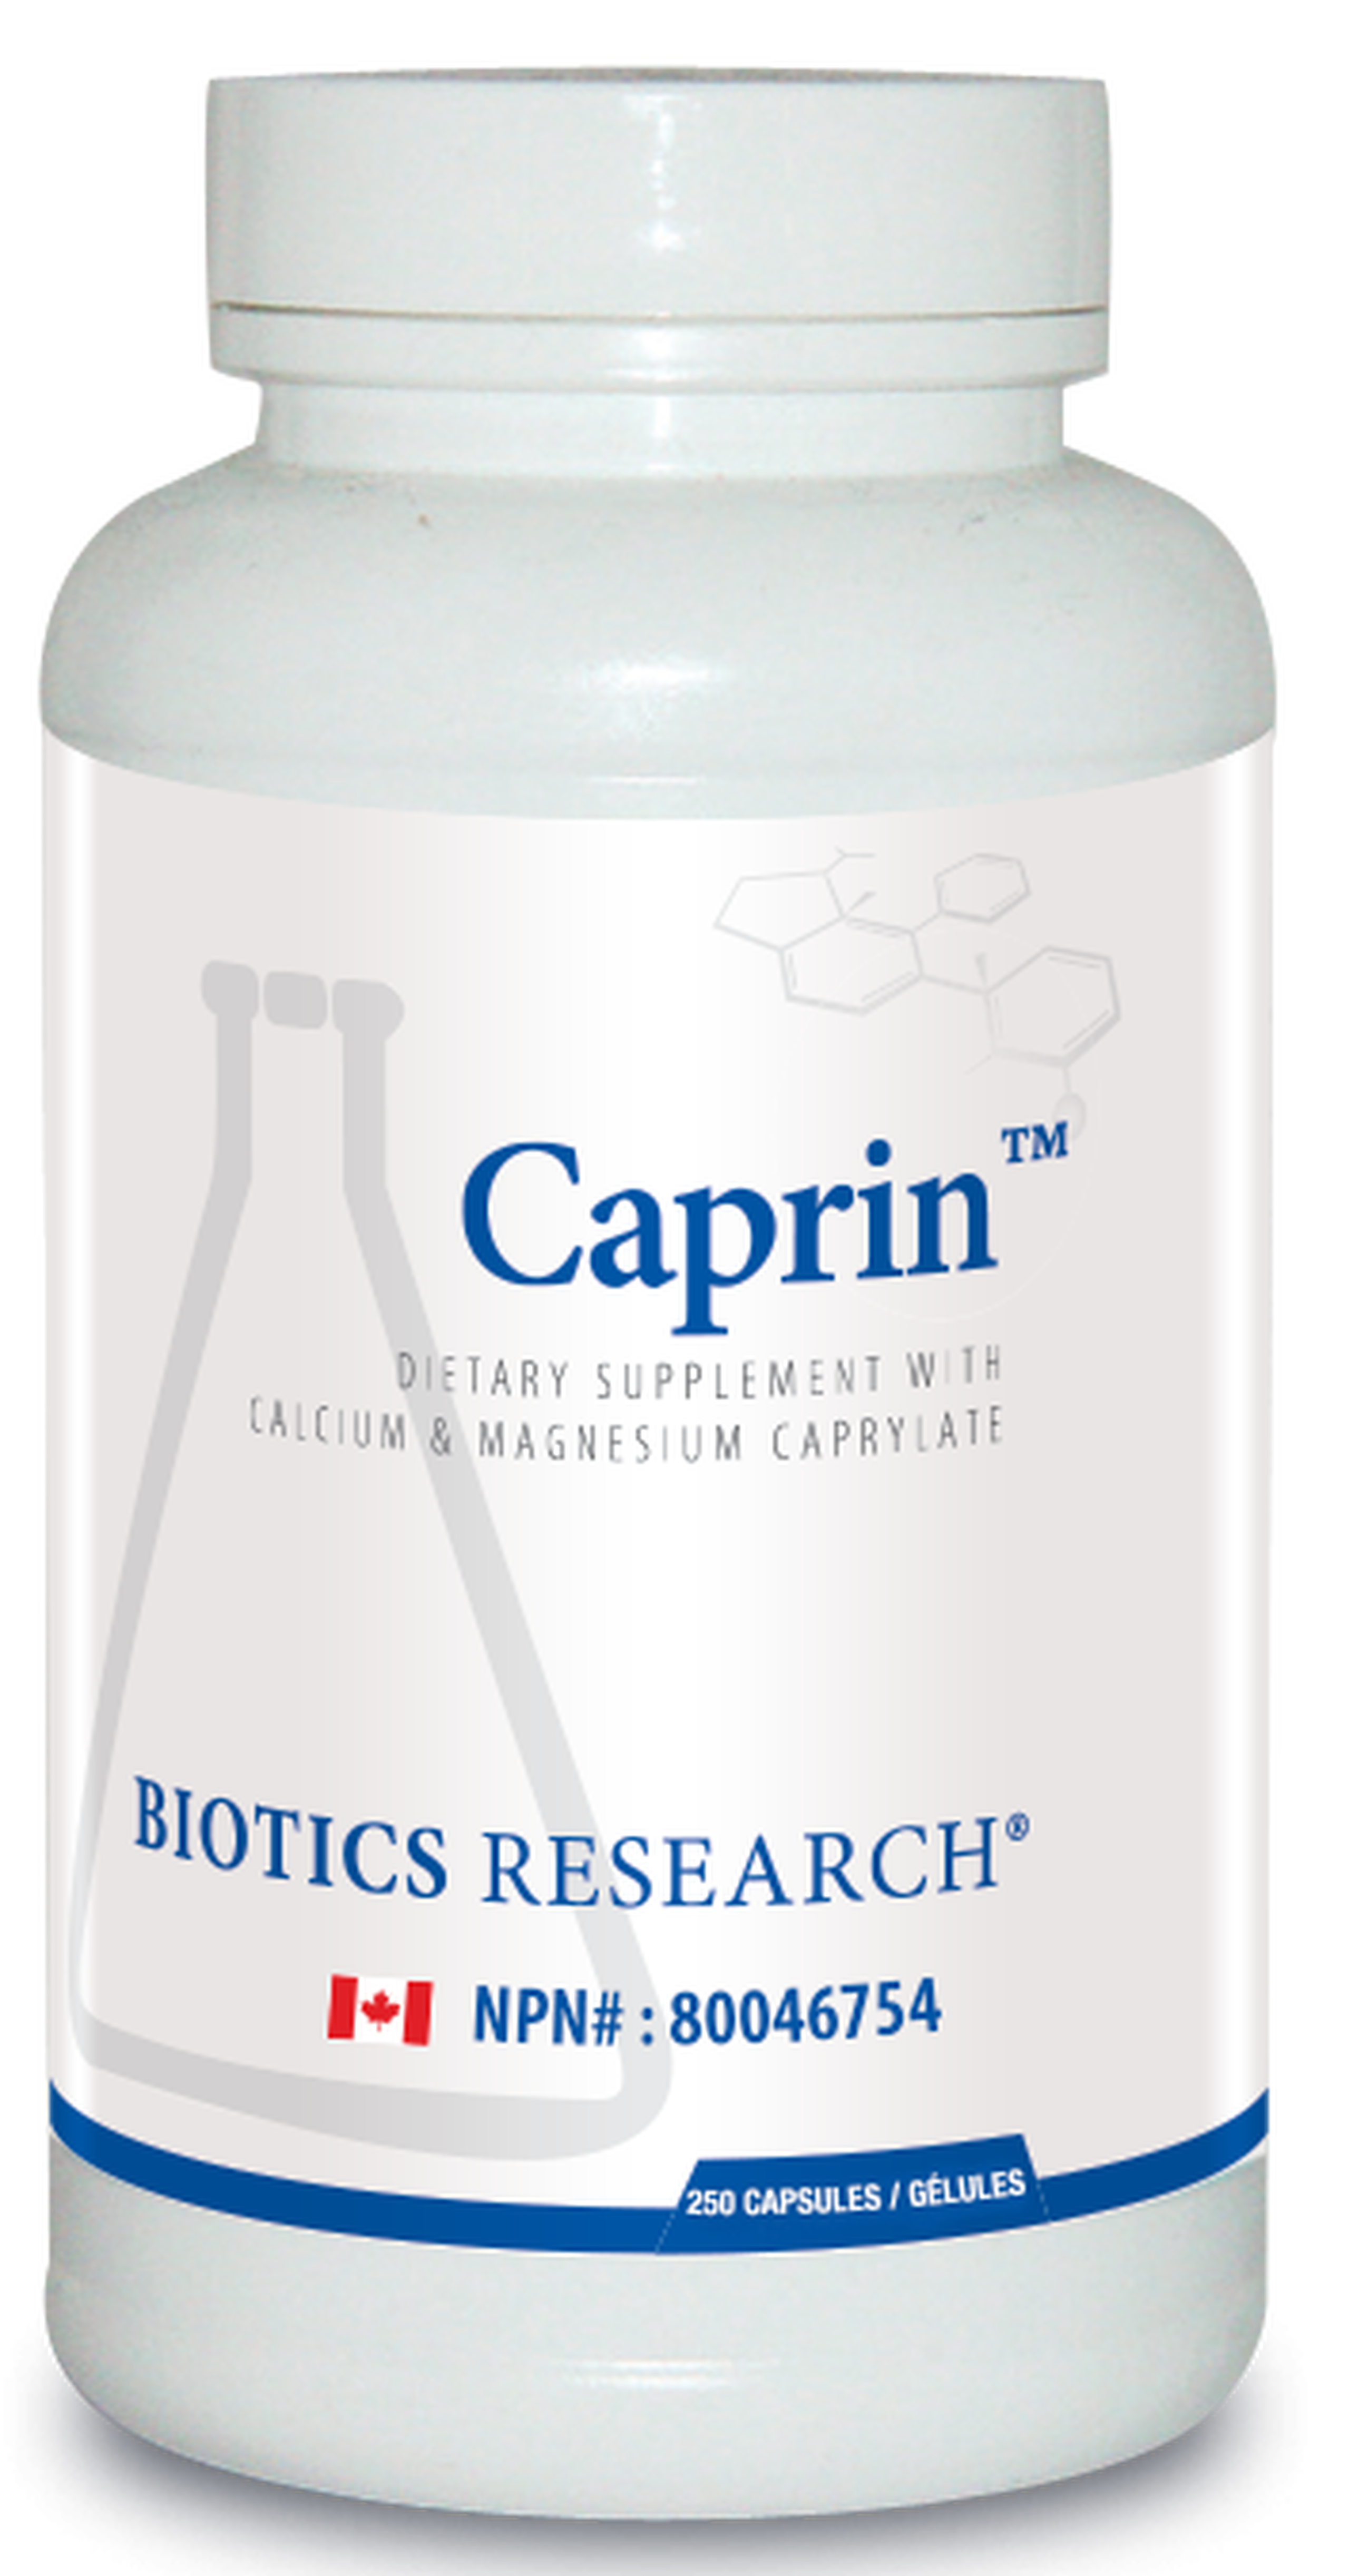 Biotics Research: Caprin 250 Capsules